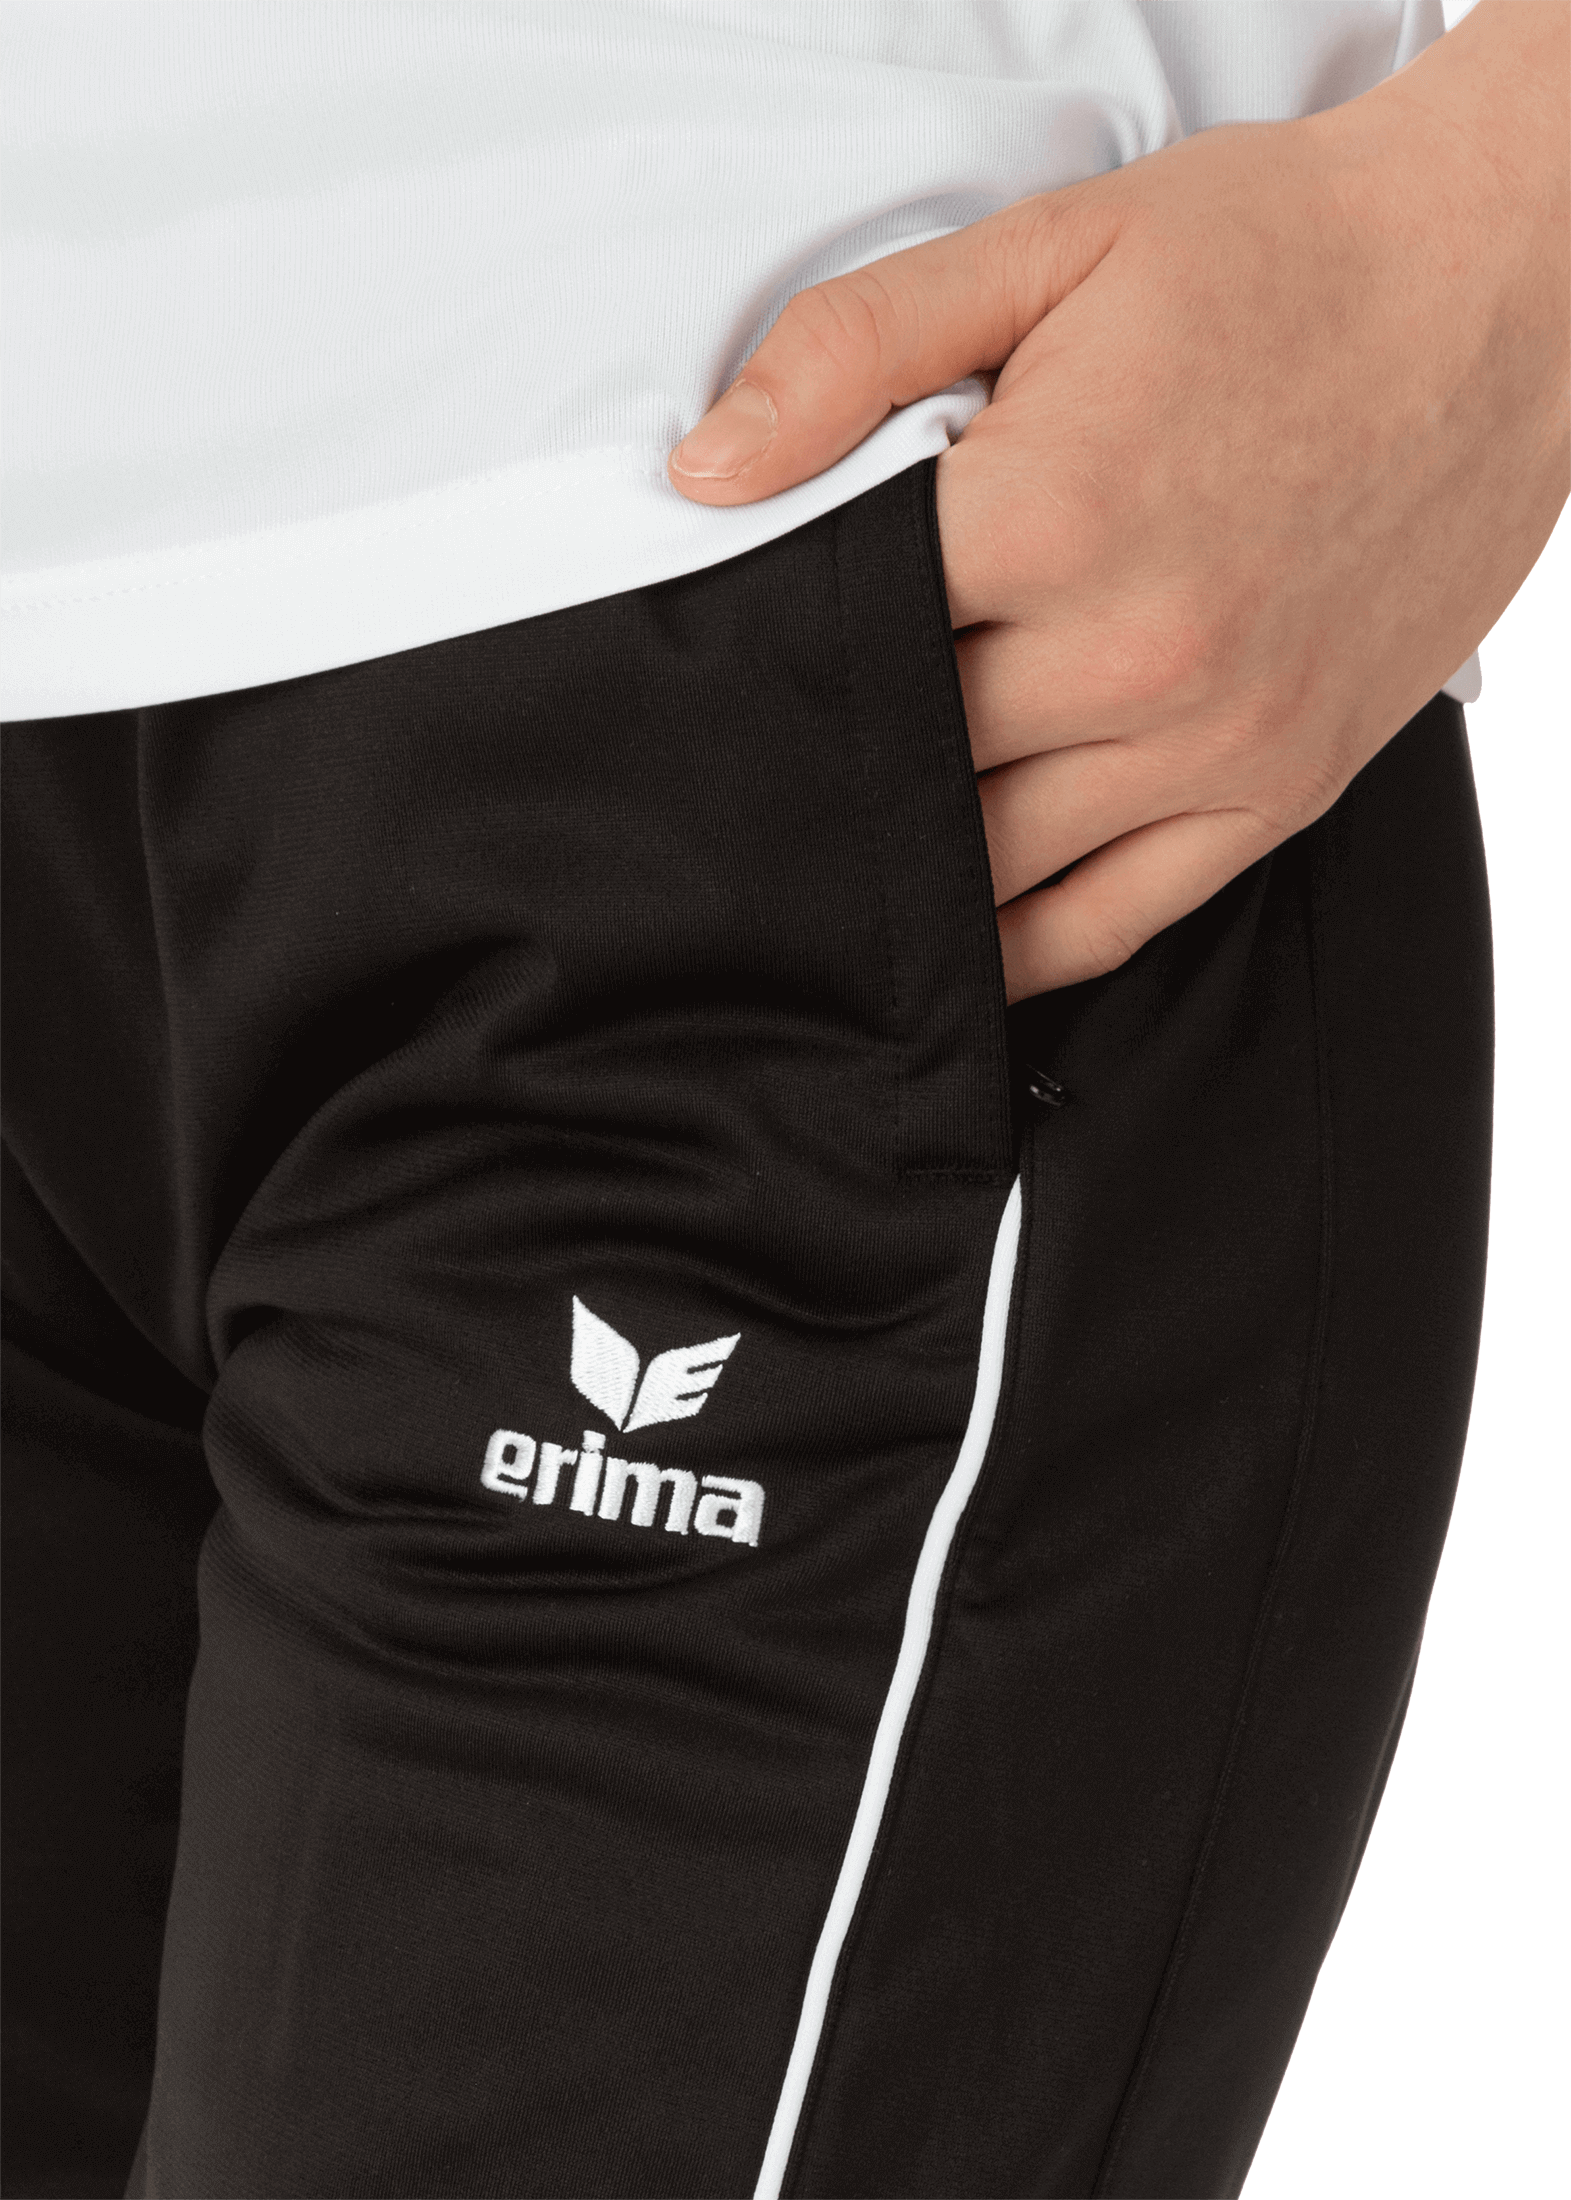 erima SHOOTER 2.0 Polyesterhose Trainingshose Sporthose Jogginghose Herren 